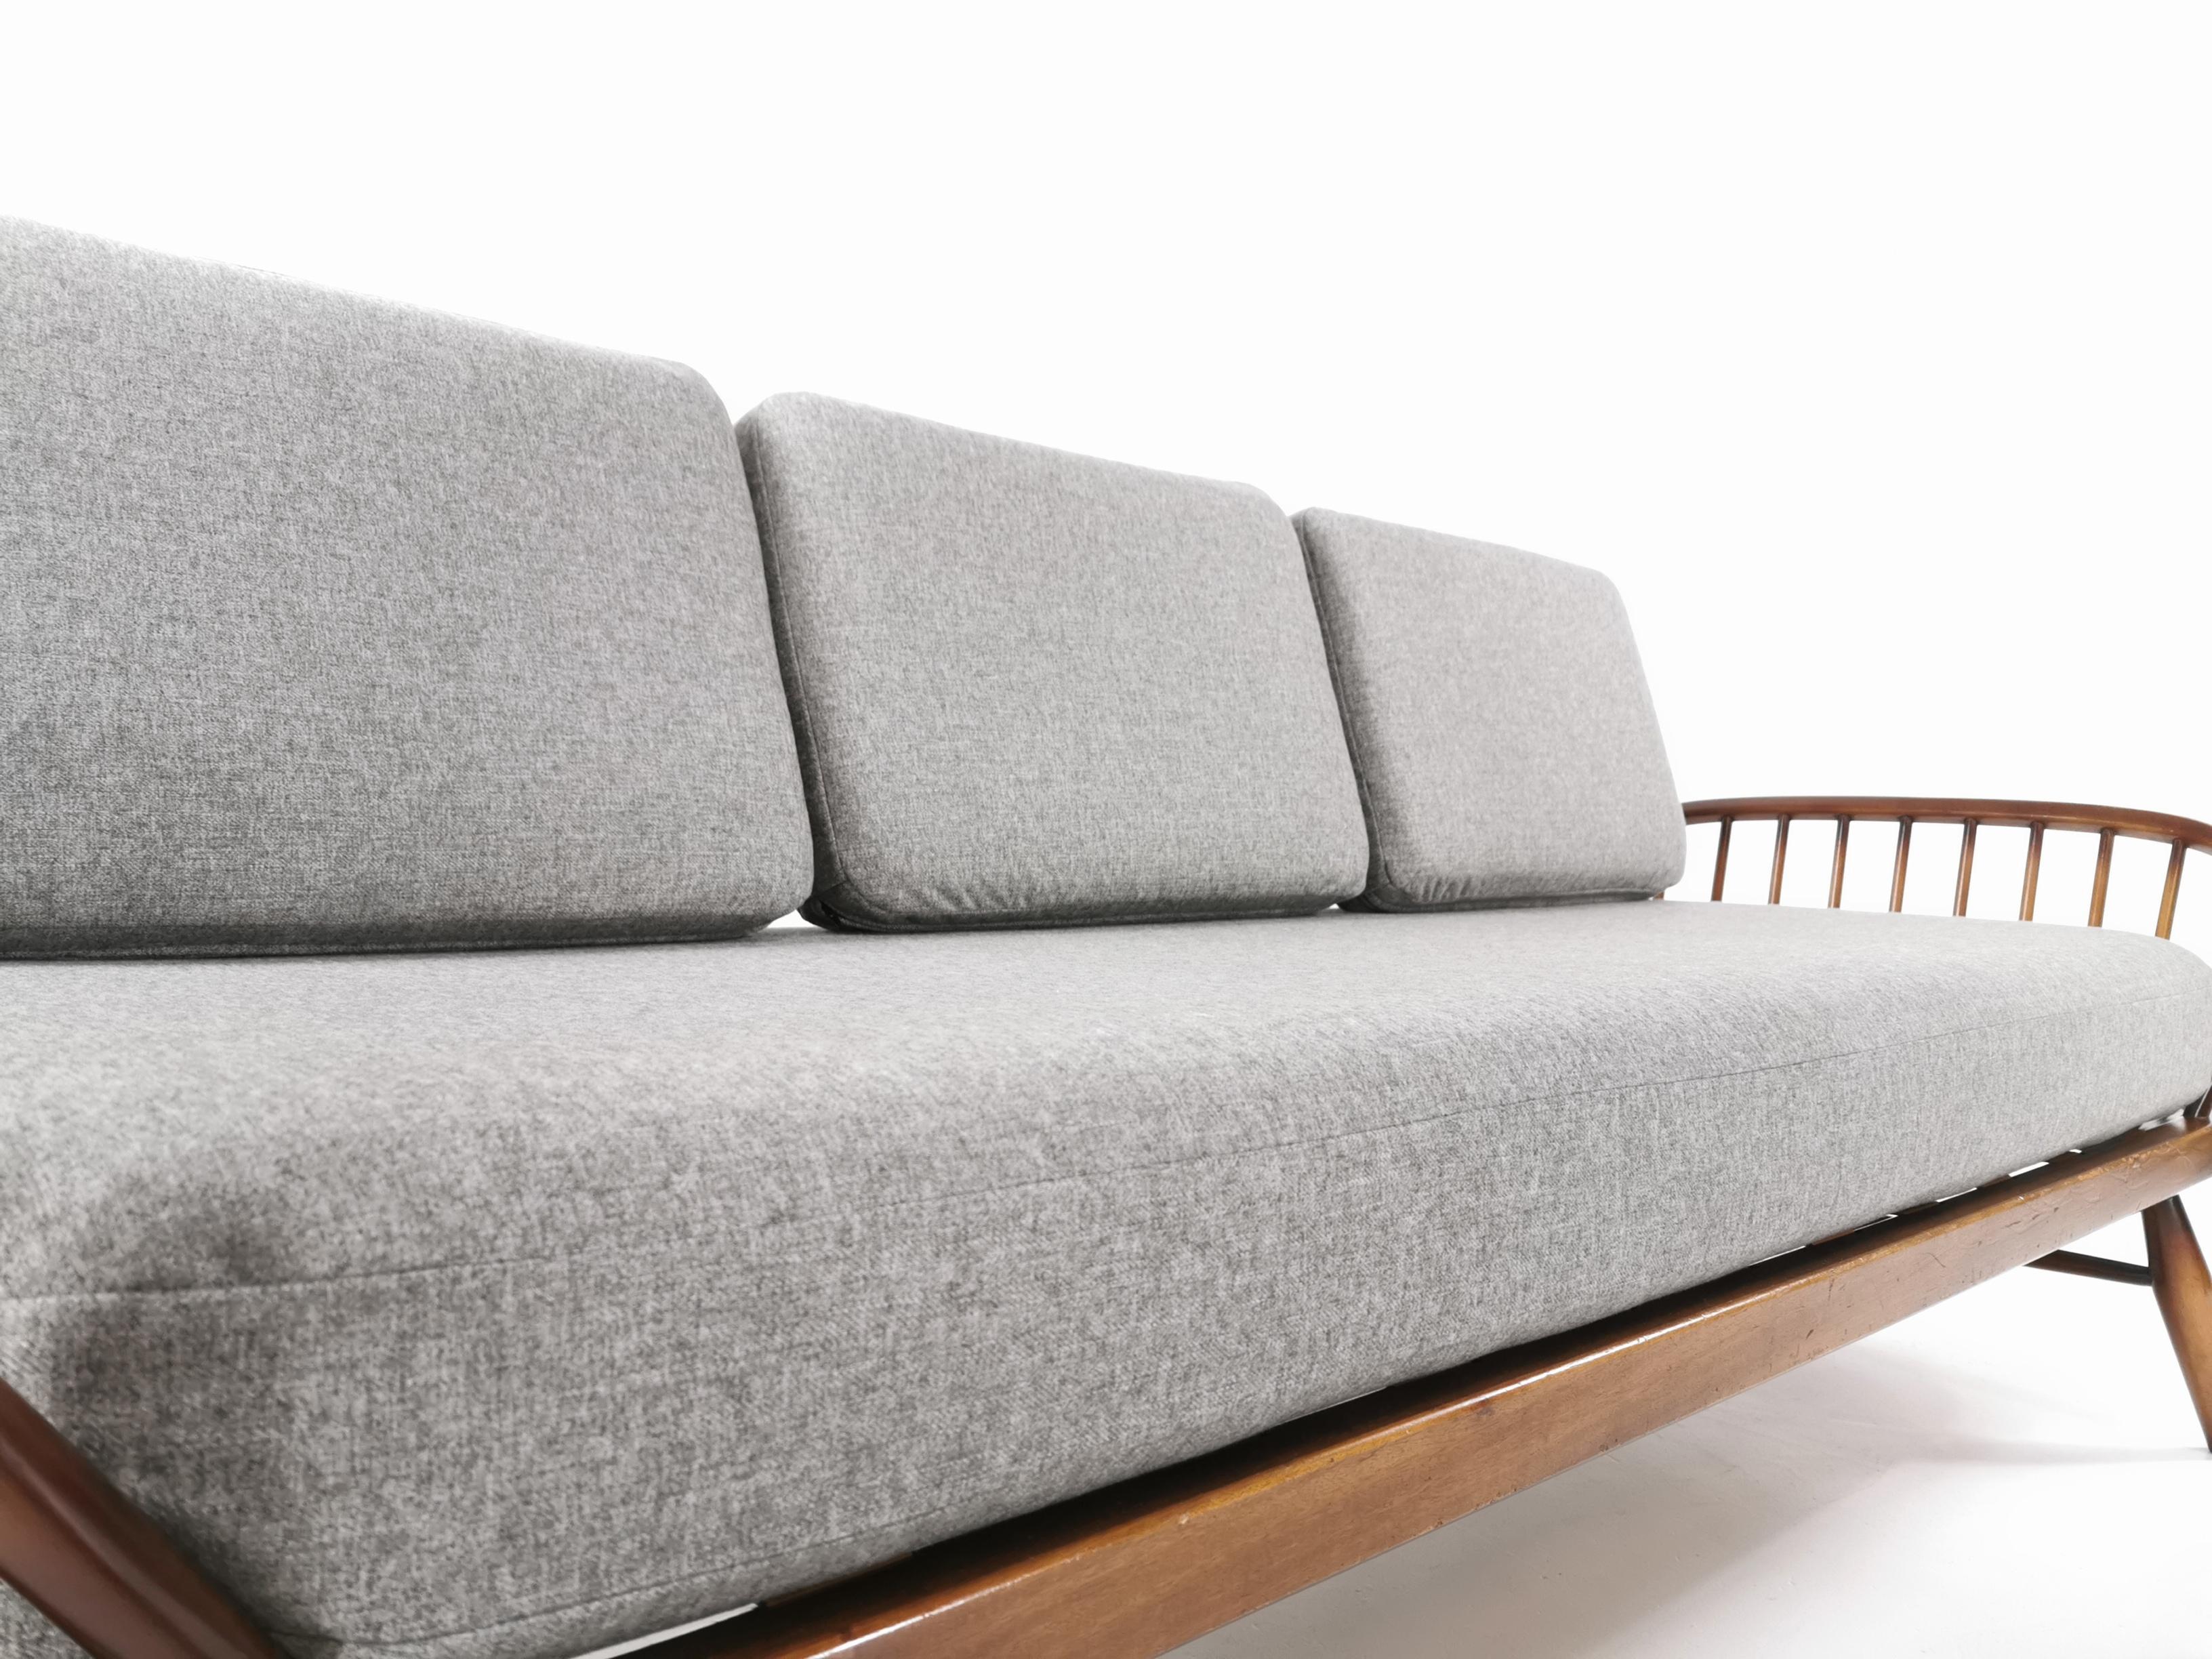 20th Century Ercol Soft Grey Herringbone Day Bed Studio Couch Sofa Vintage Midcentury